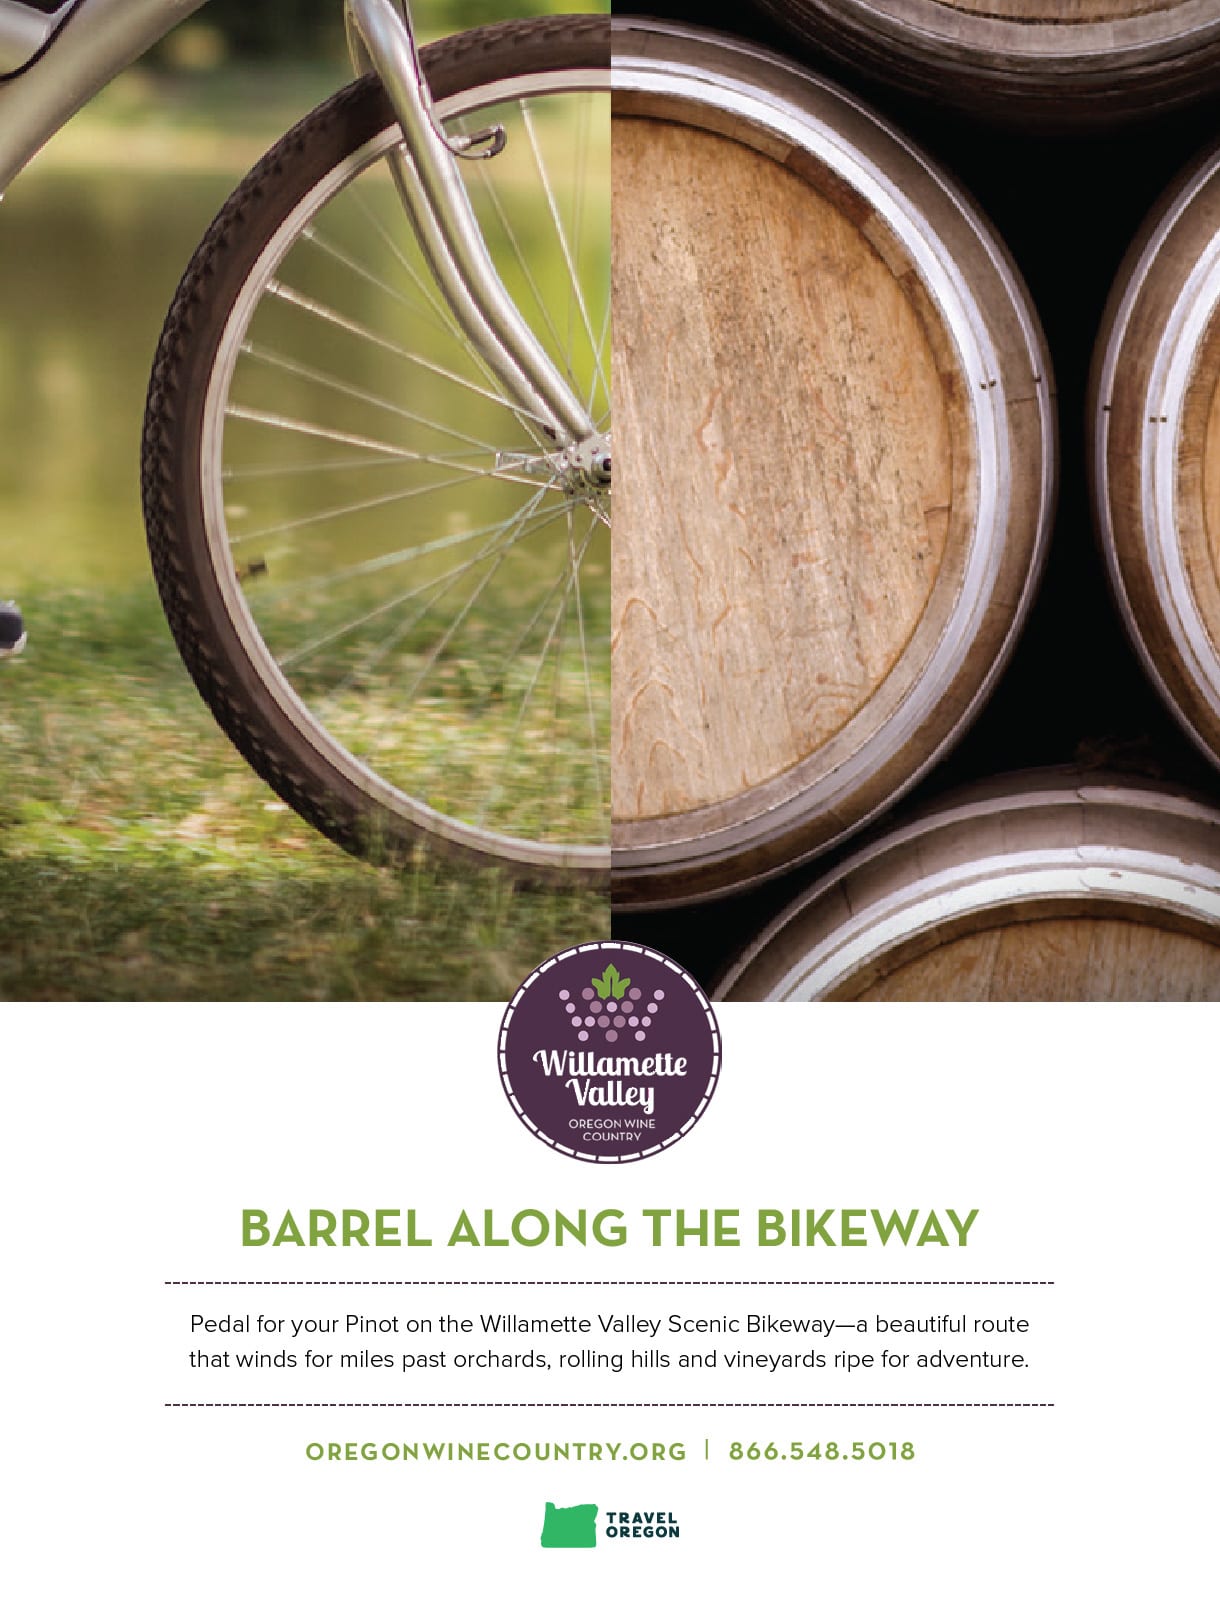 Oregon Wine Country - “Wine Plus” social campaign - print ad1